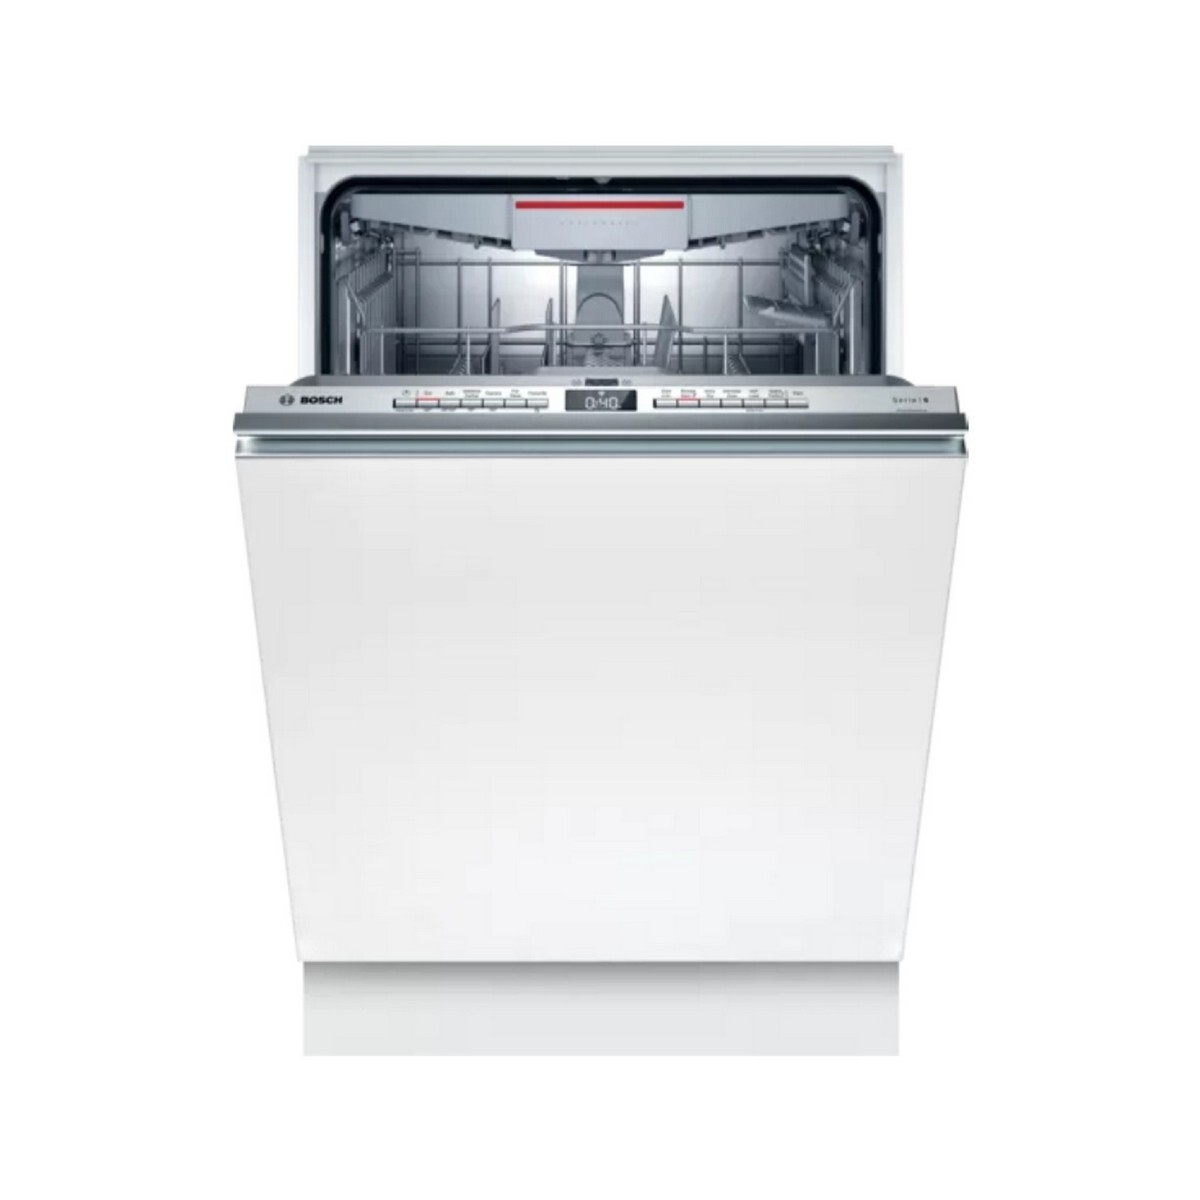 Bosch Builtin Dish Washer SMV6HVX00I